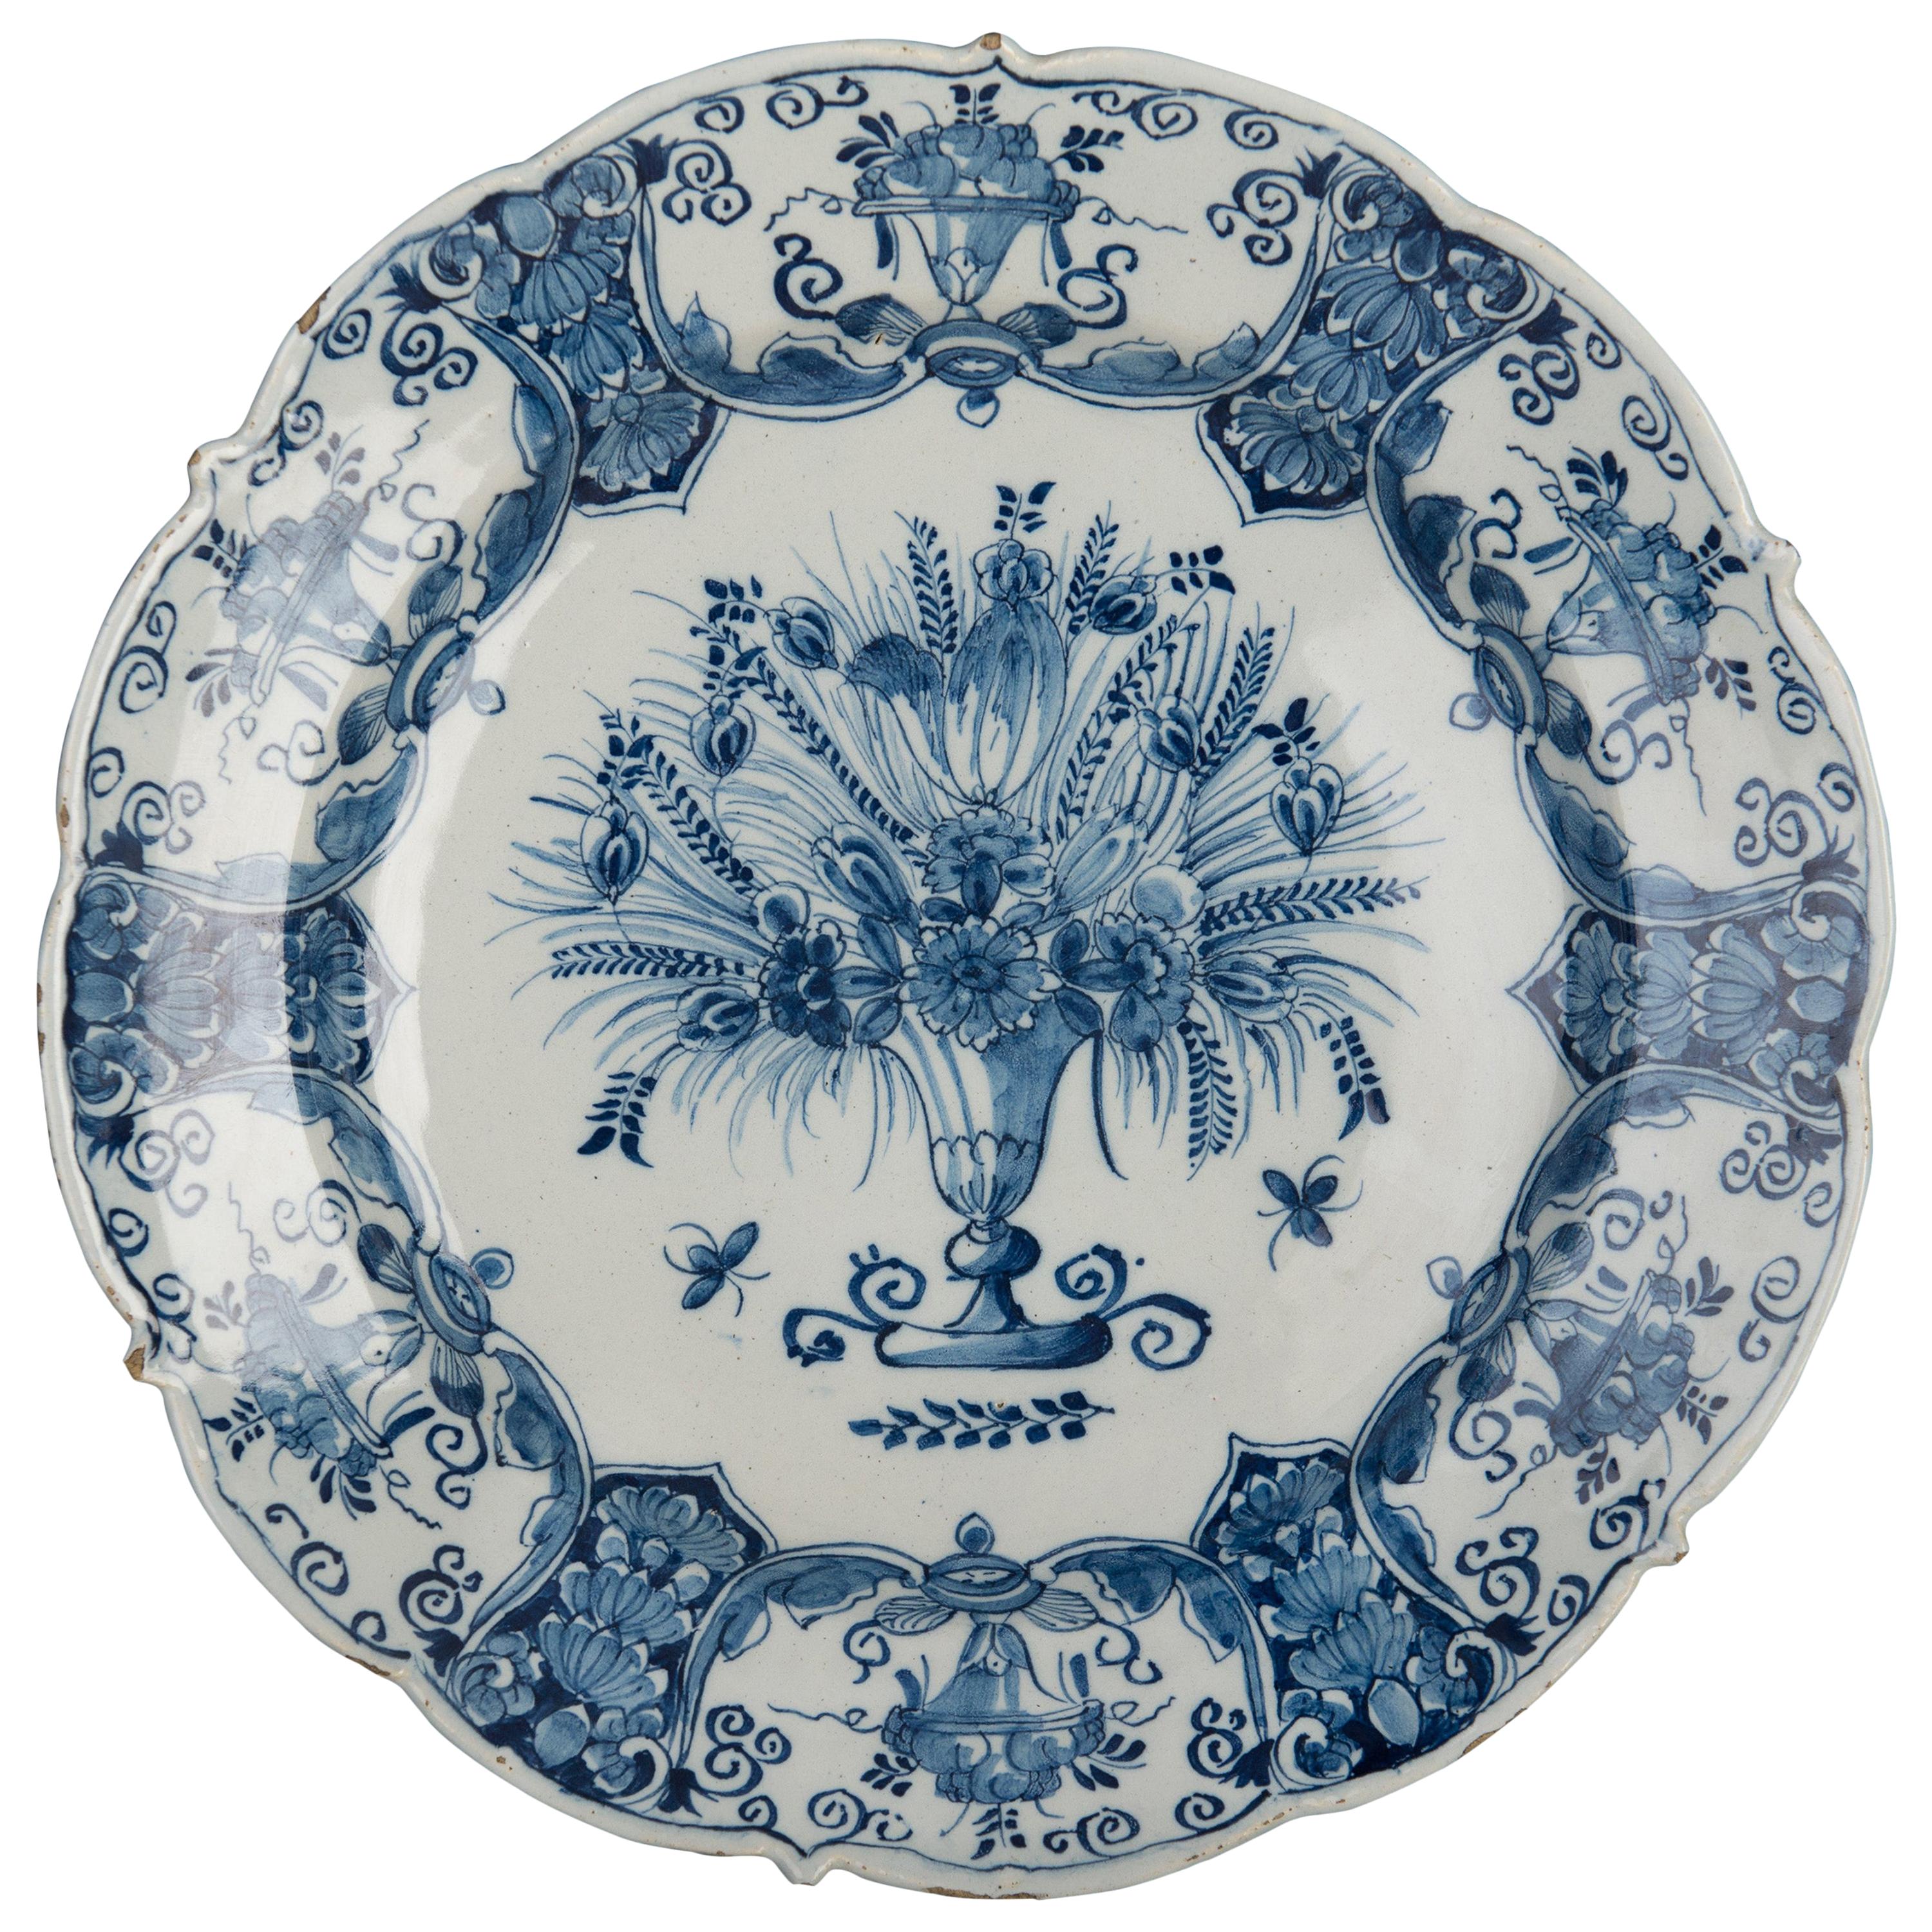 Grand plat bleu et blanc avec vase à fleurs de Delft, 1750, The Three Bells Pottery en vente